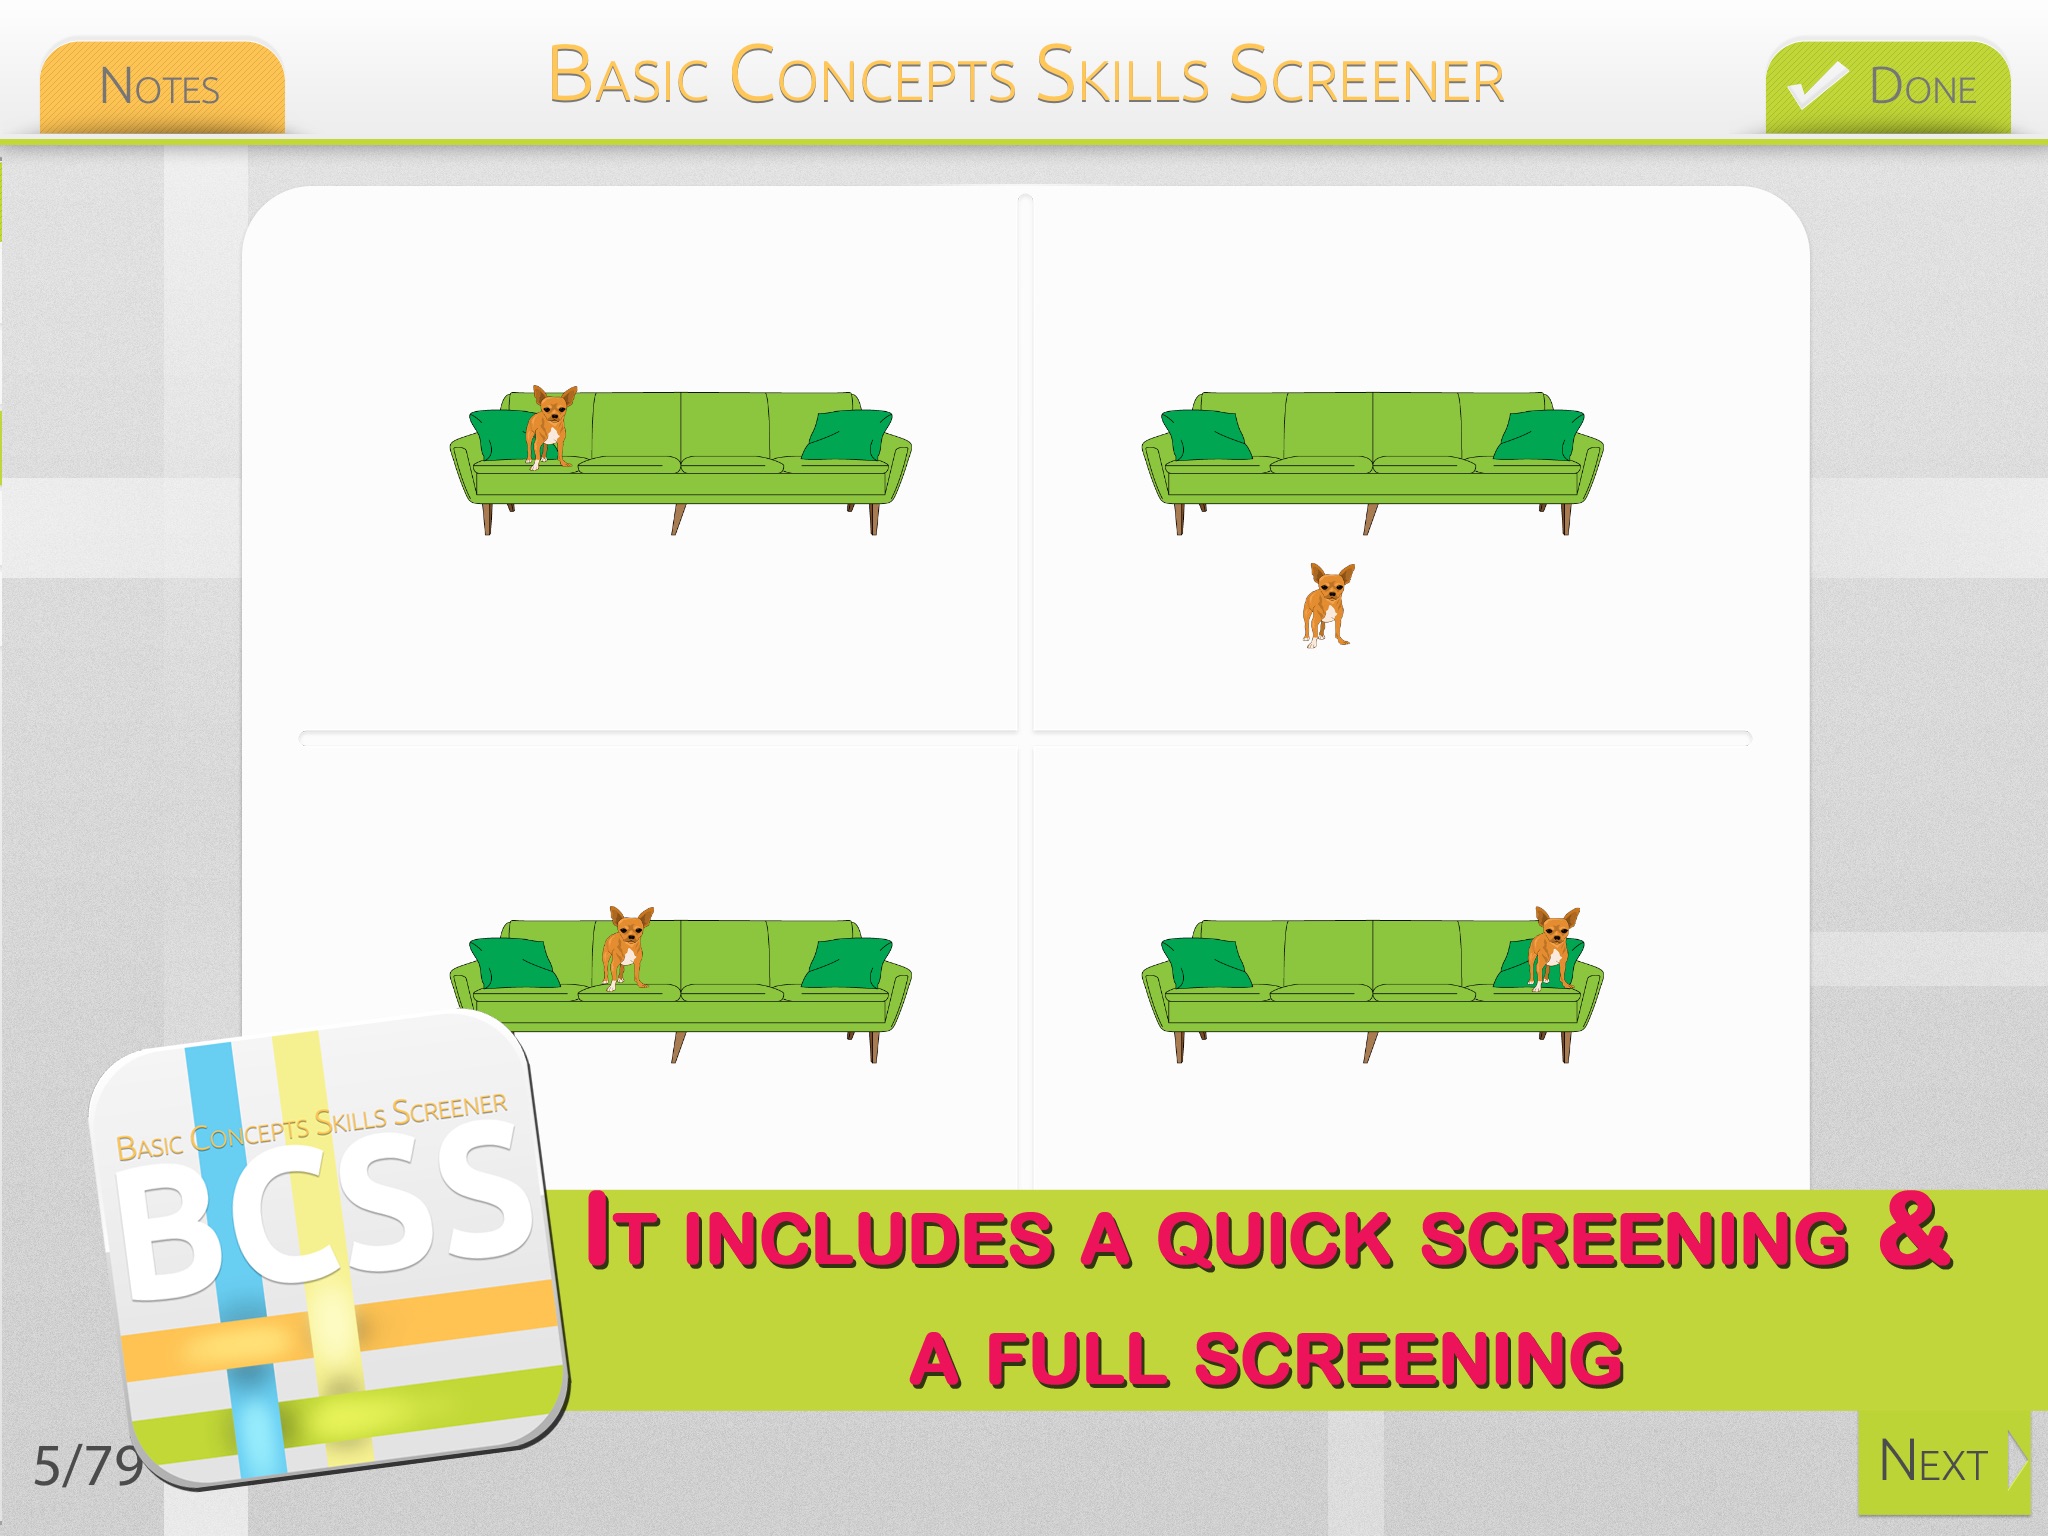 Basic Concepts Skills Screener screenshot 2